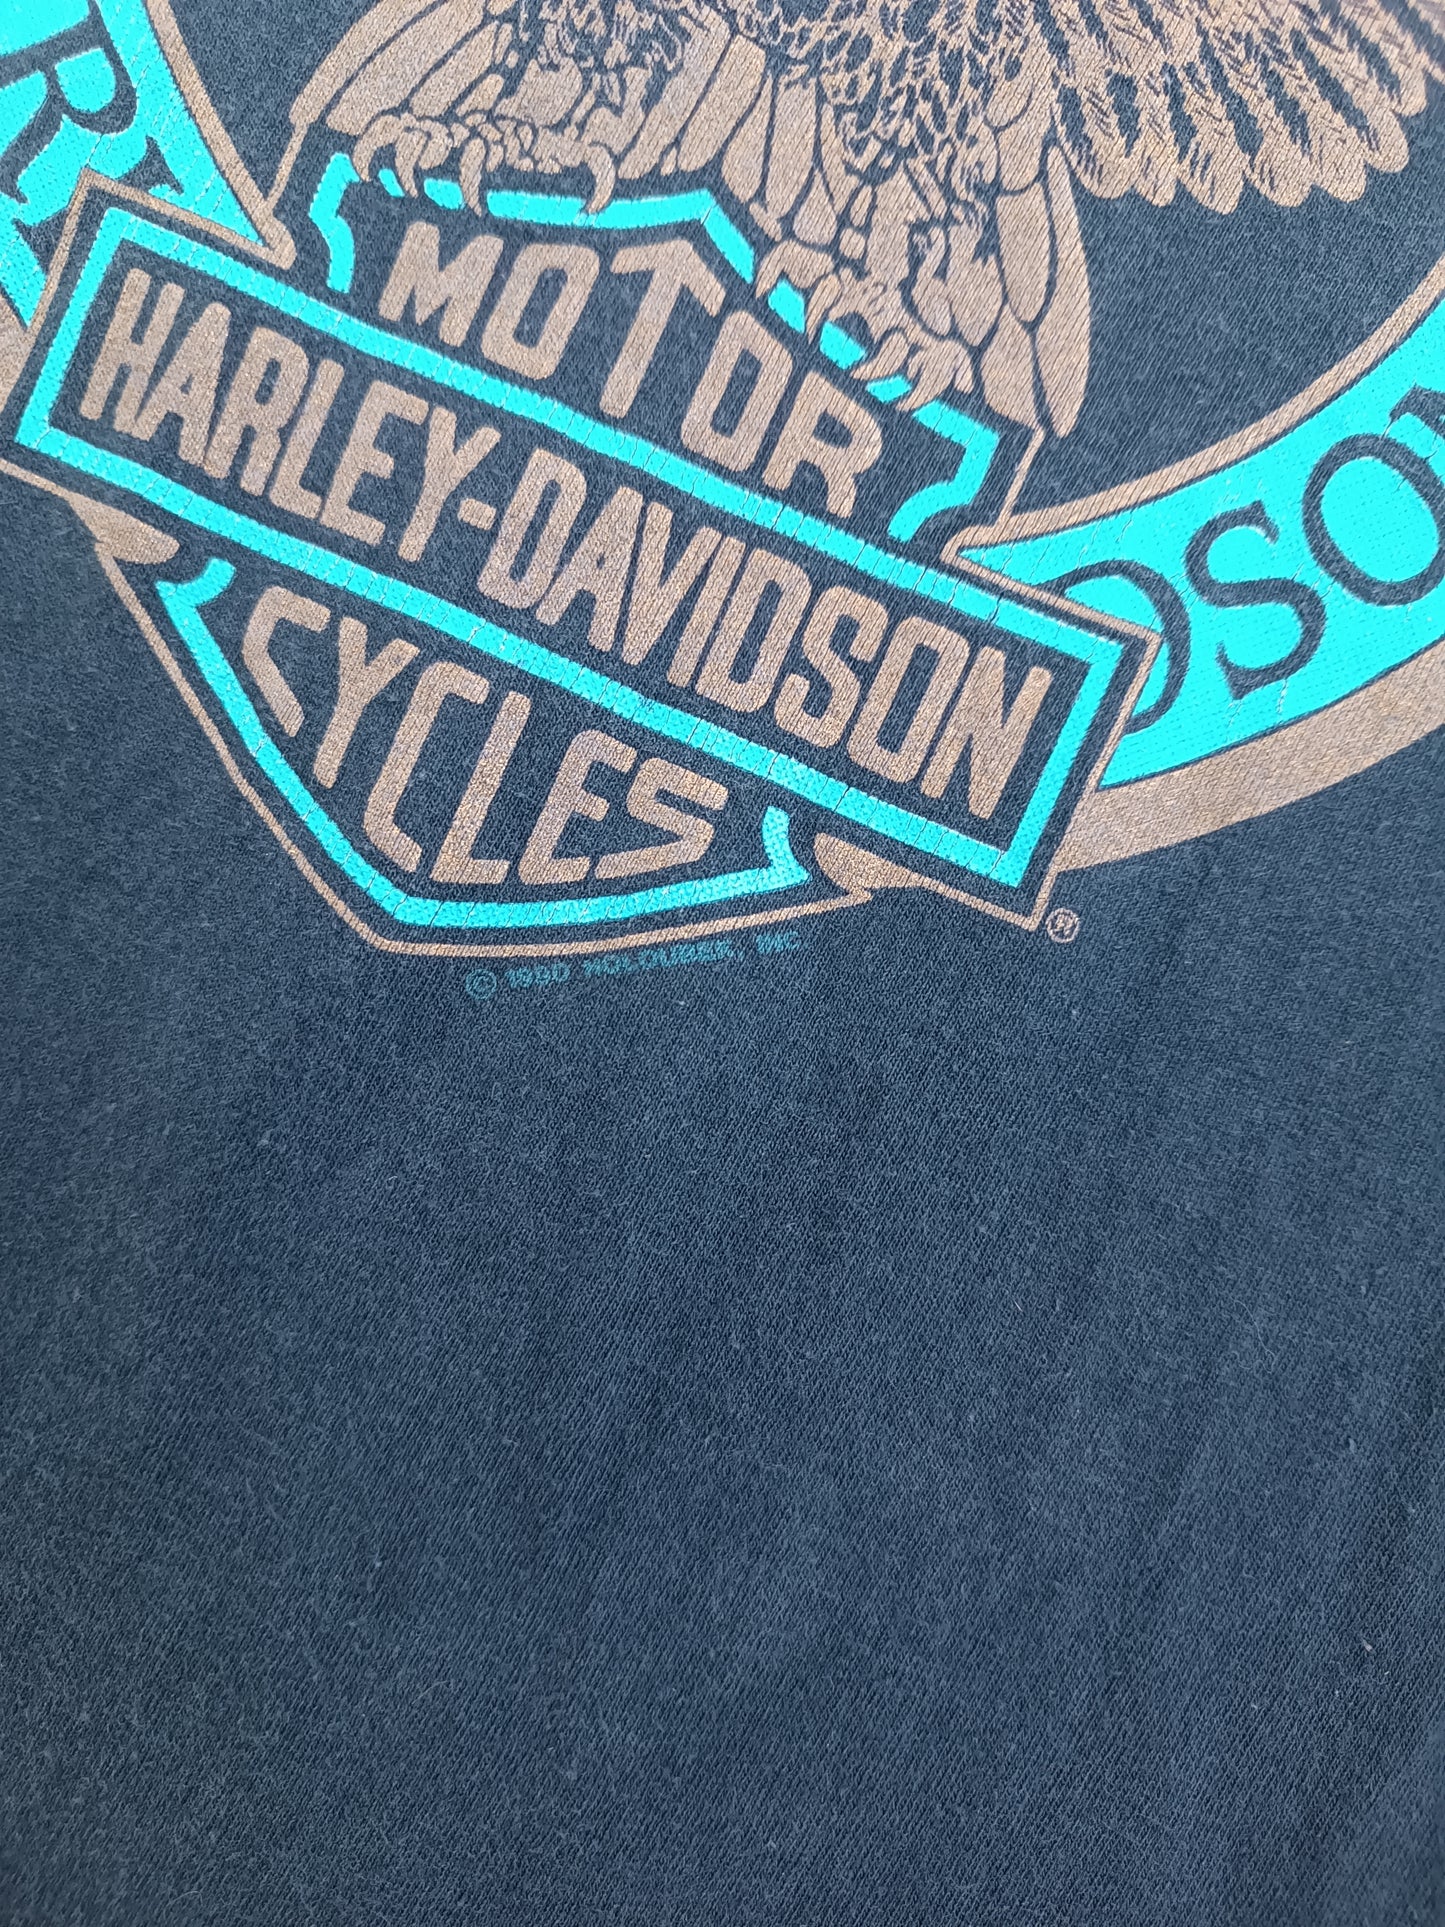 1990 Harley Davidson - XL